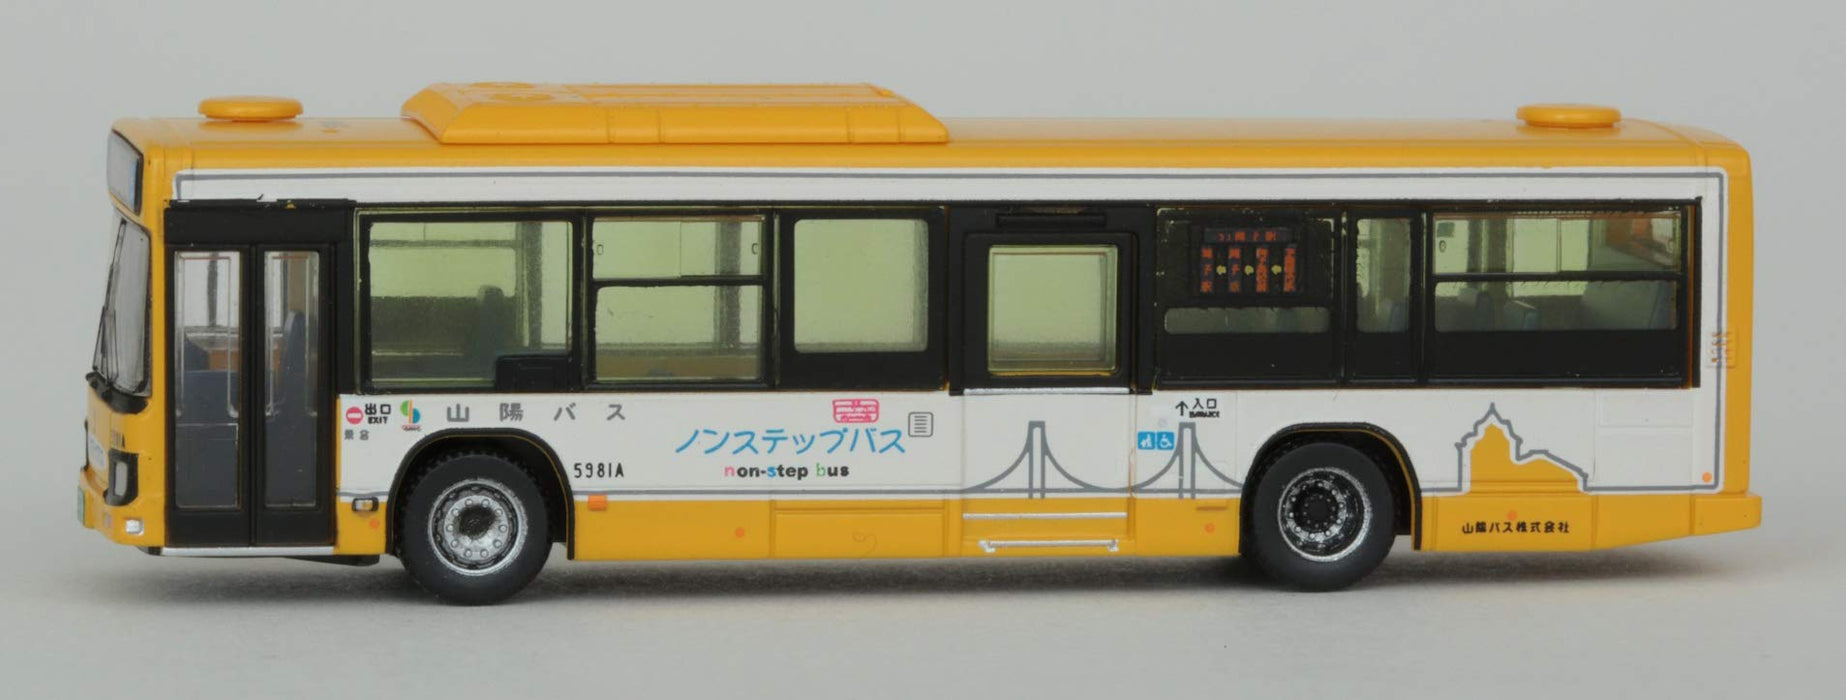 Tomytec National Bus Collection Jb074 Sanyo Bus Diorama Première édition limitée